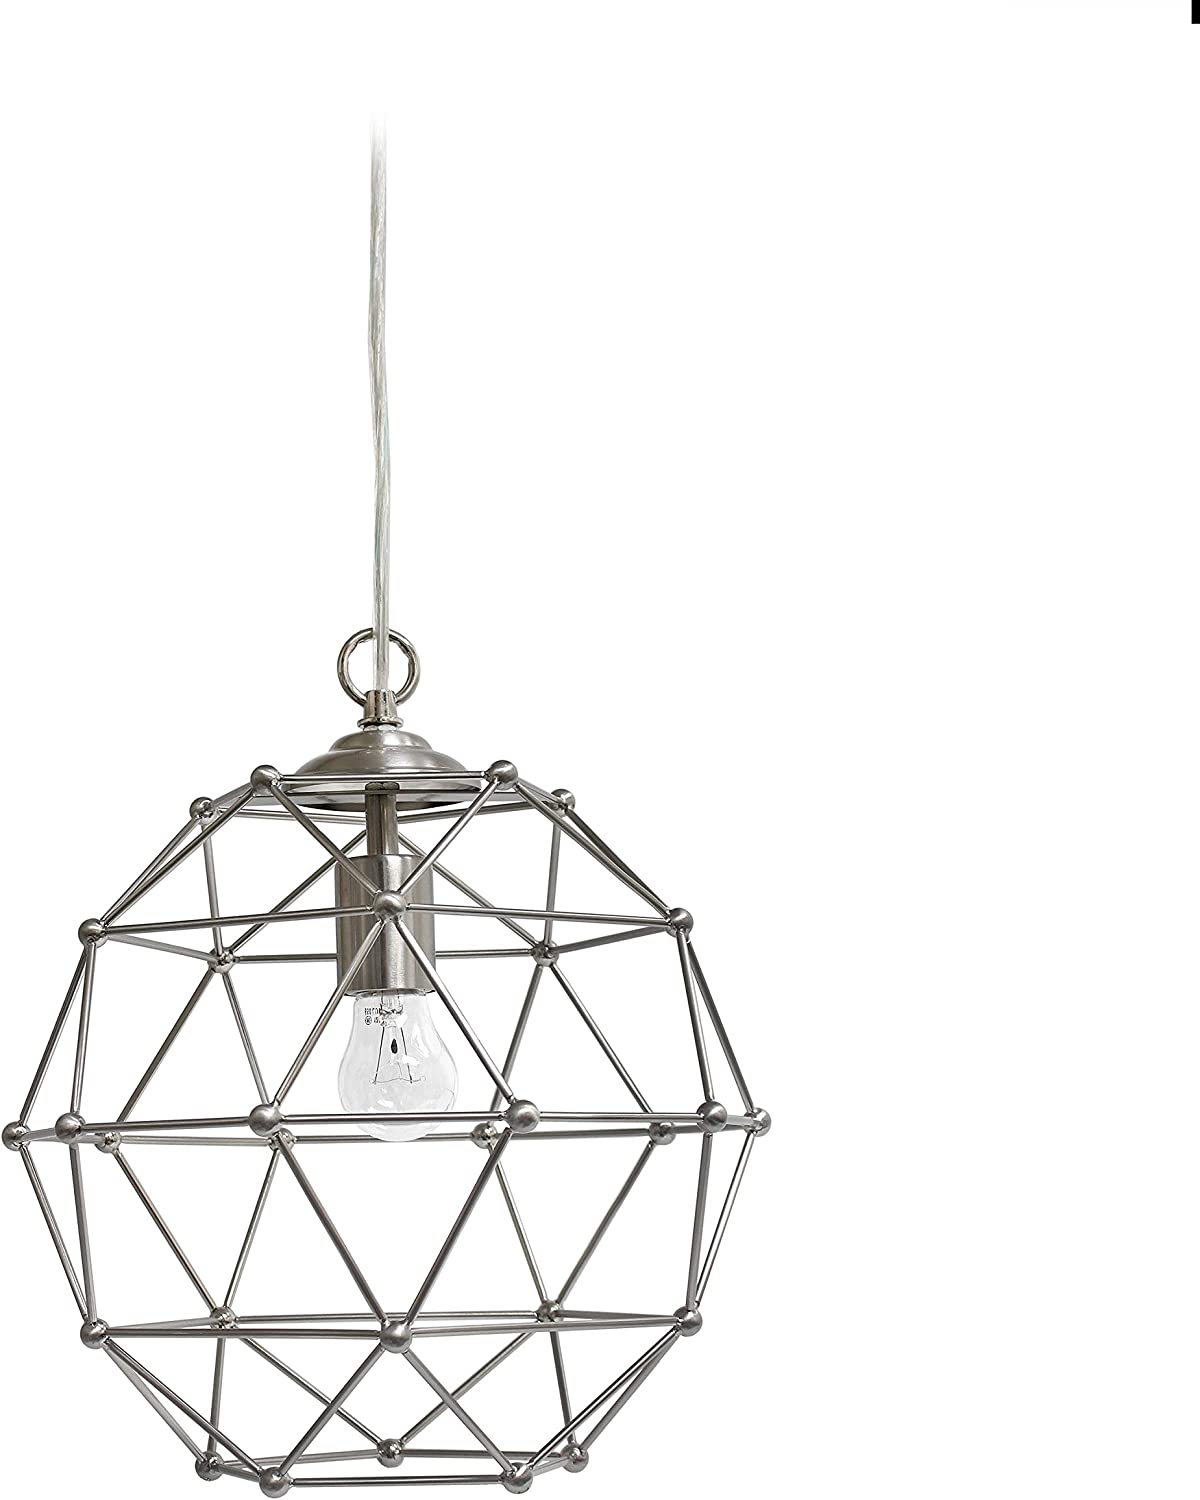 Elegant Designs PT1005-BSN 4 Light Hanging Industrial Ceiling Light Wire Cage Pendant, 18 Inch, Brushed Nickel